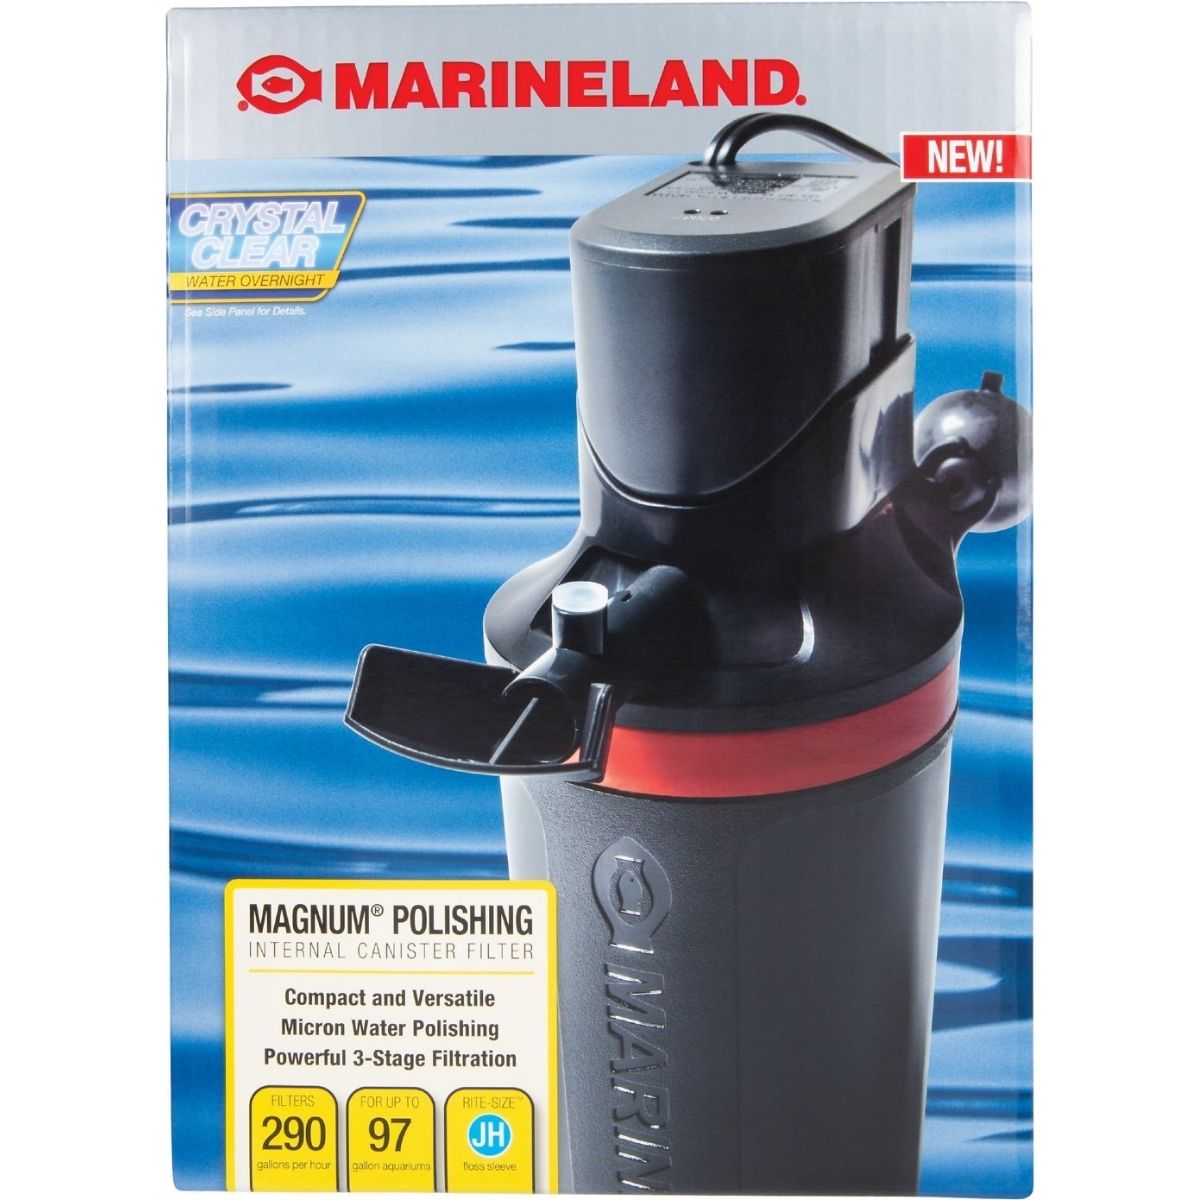 The Best Internal Aquarium Filters: MarineLand Magnum Polishing Internal Canister Filter